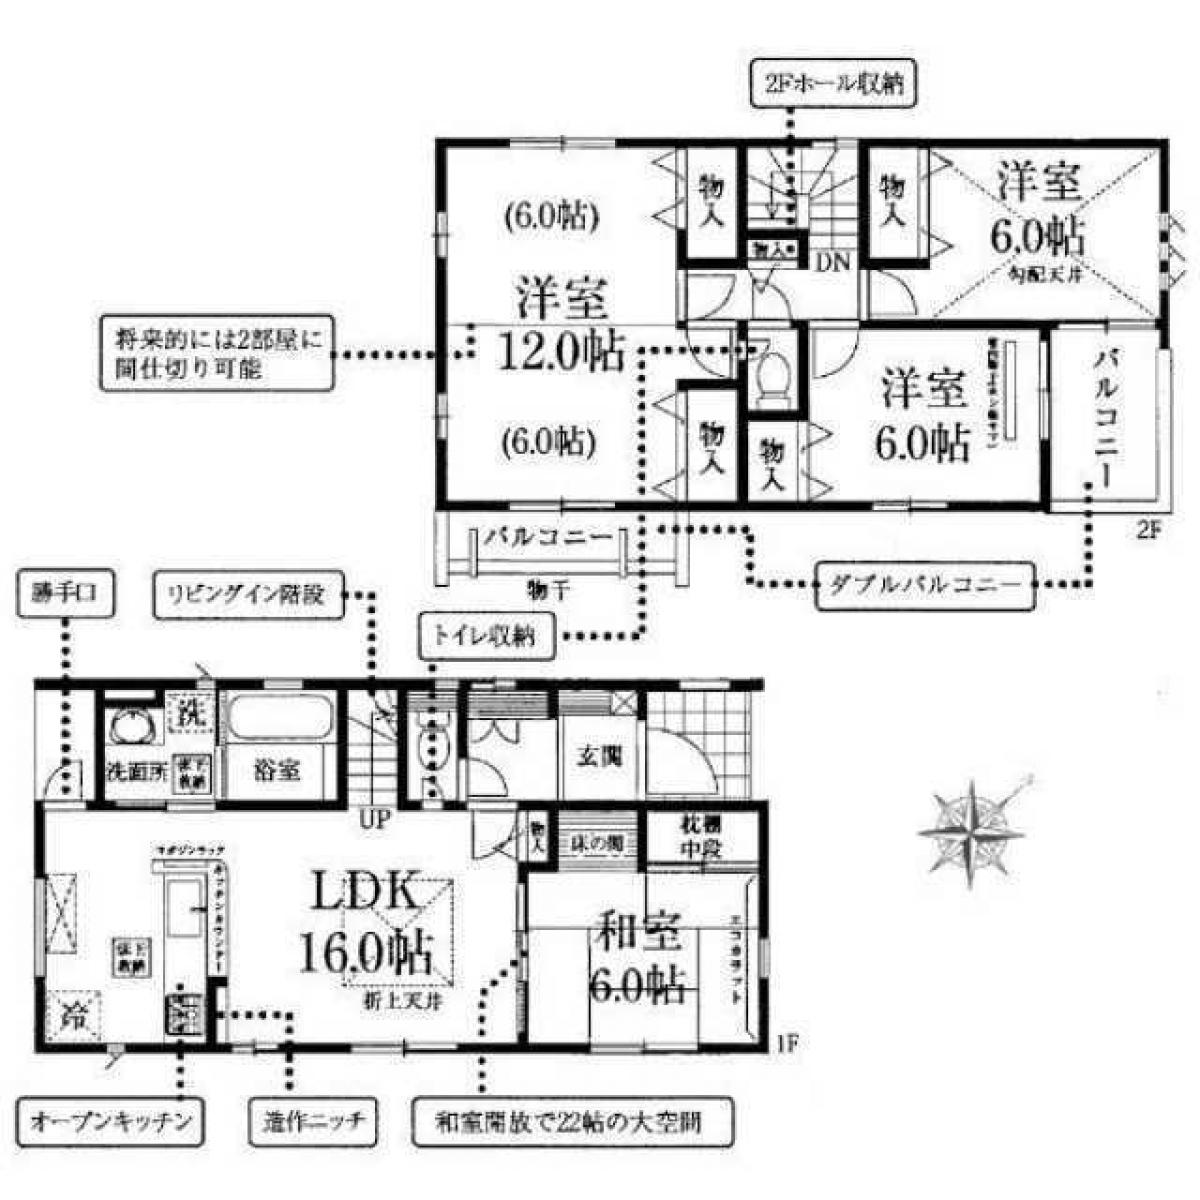 Picture of Home For Sale in Soka Shi, Saitama, Japan